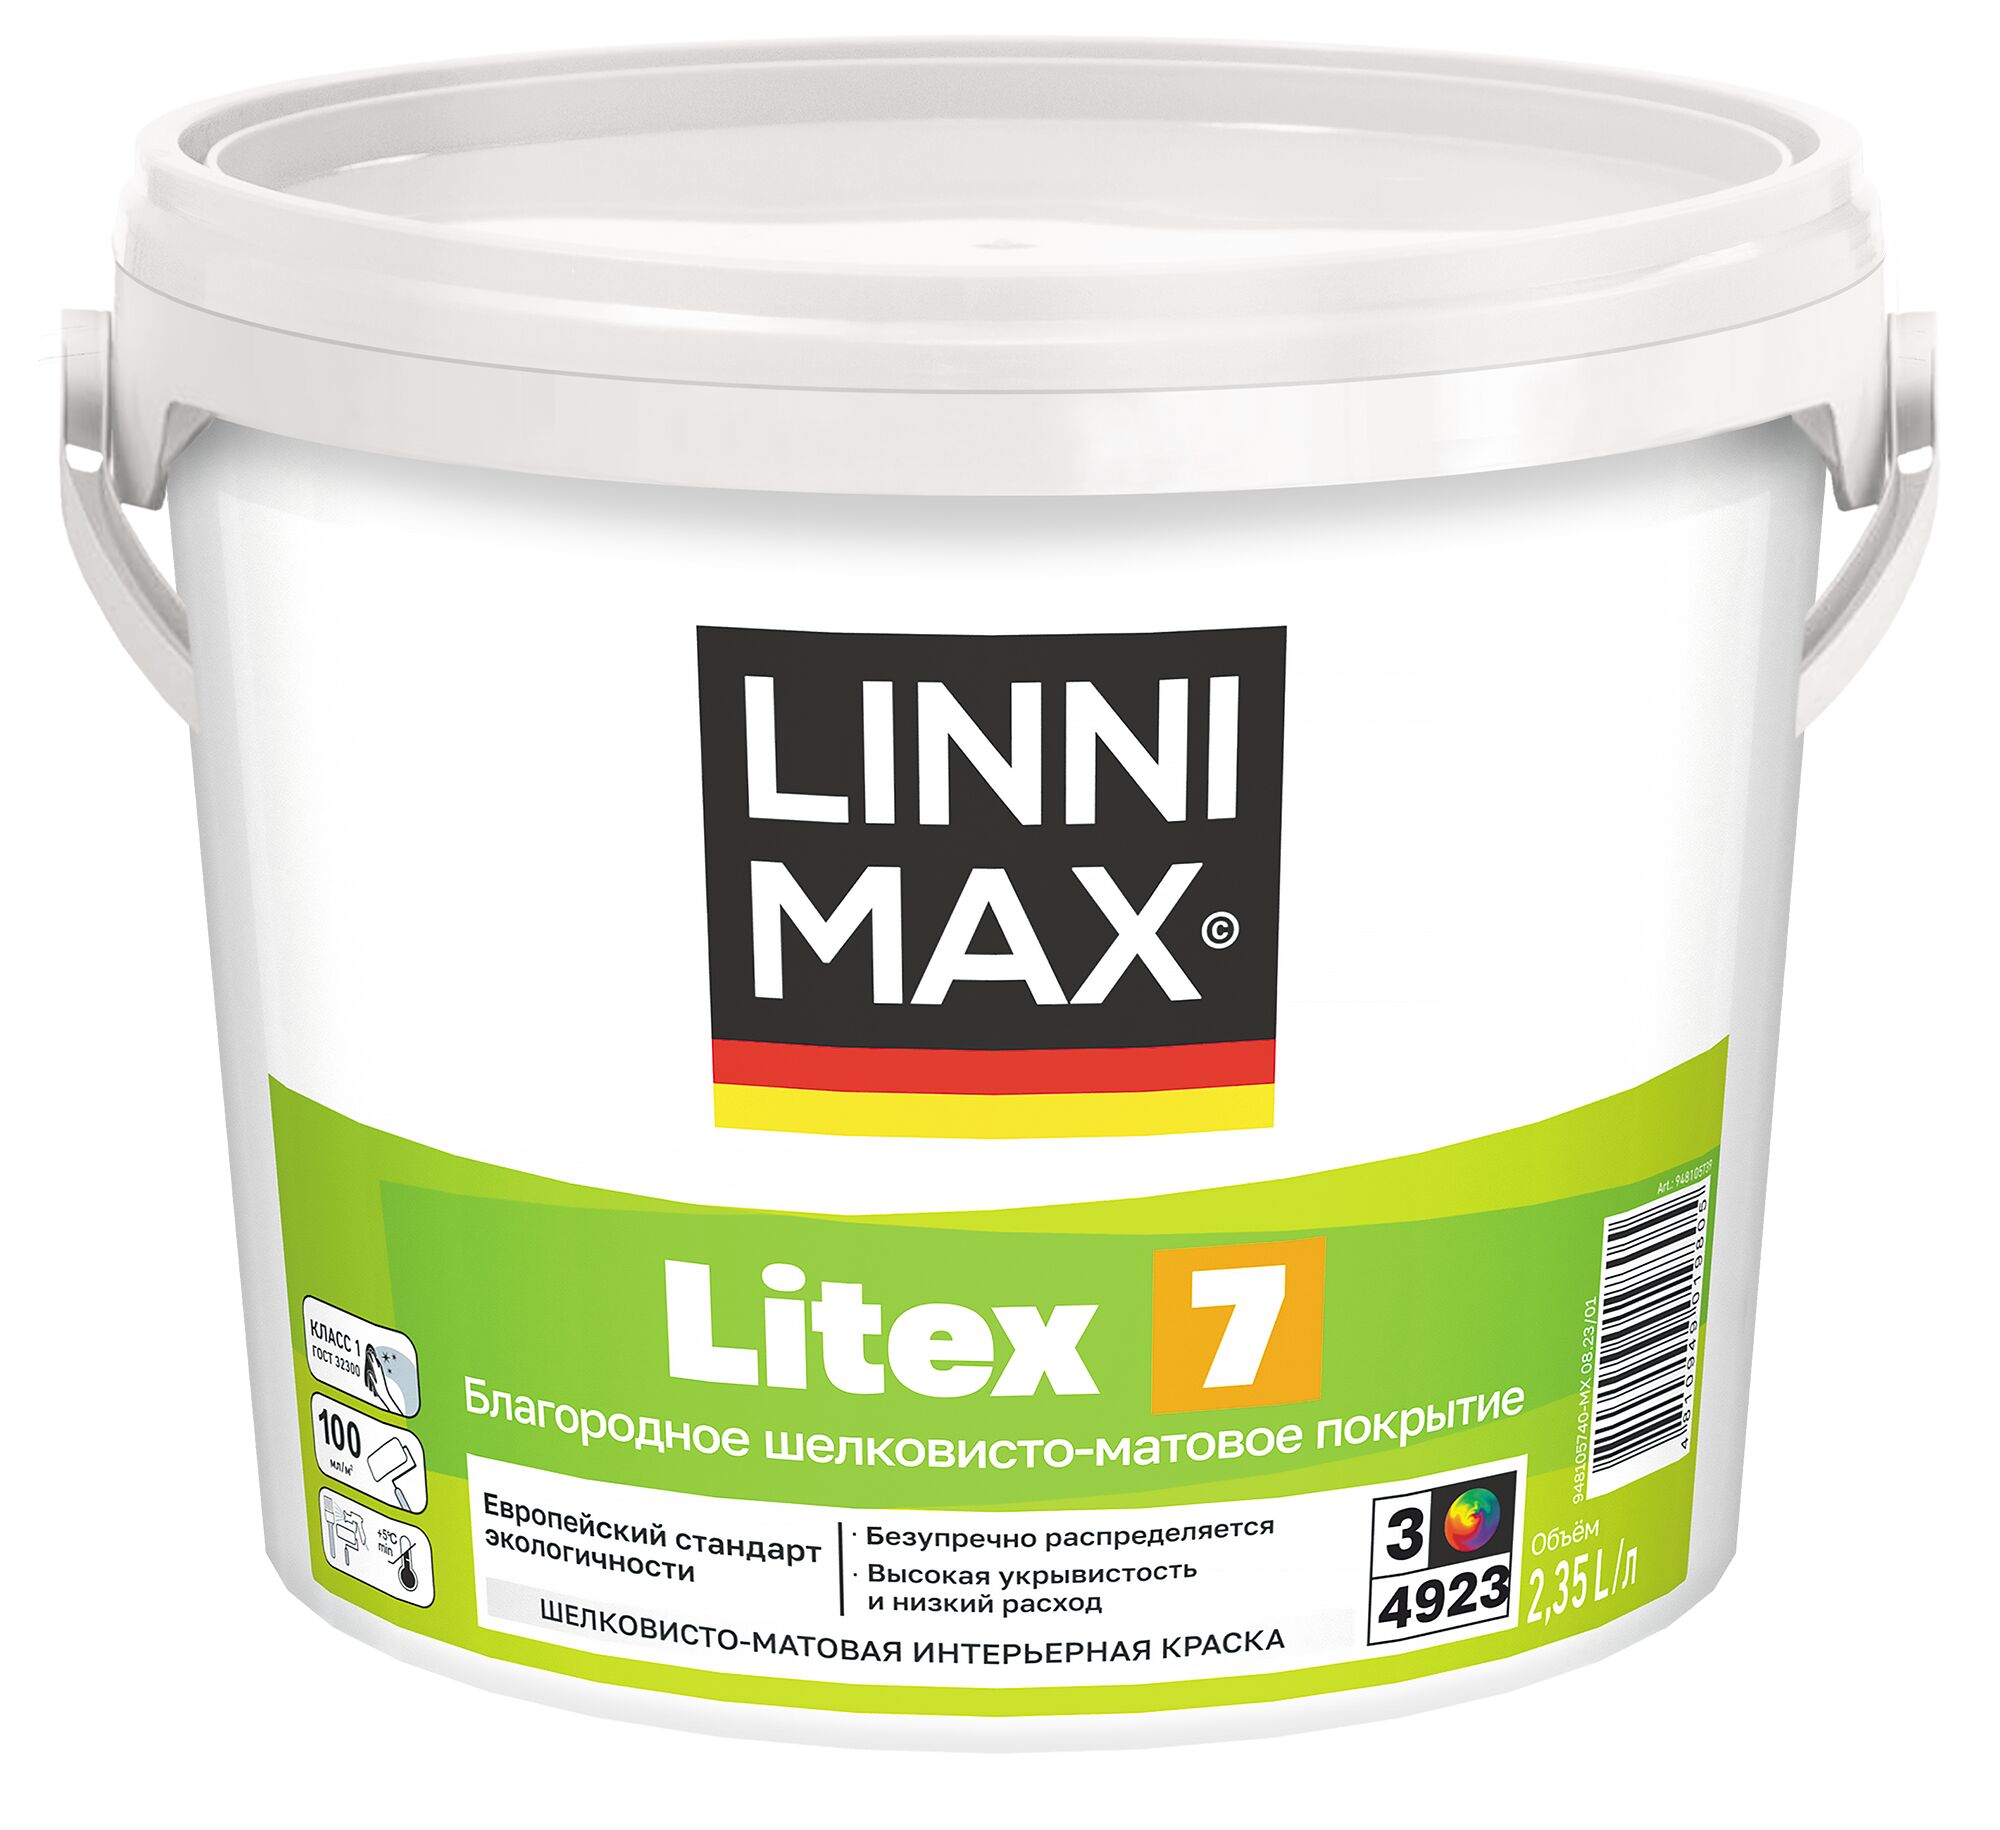 Litex 7 2,35л Краска водно-дисперсионная для внутренних работ База3 LINNIMAX, Litex 7 2,35л Краска водно-дисперсионная для внутренних работ База3 LINNIMAX